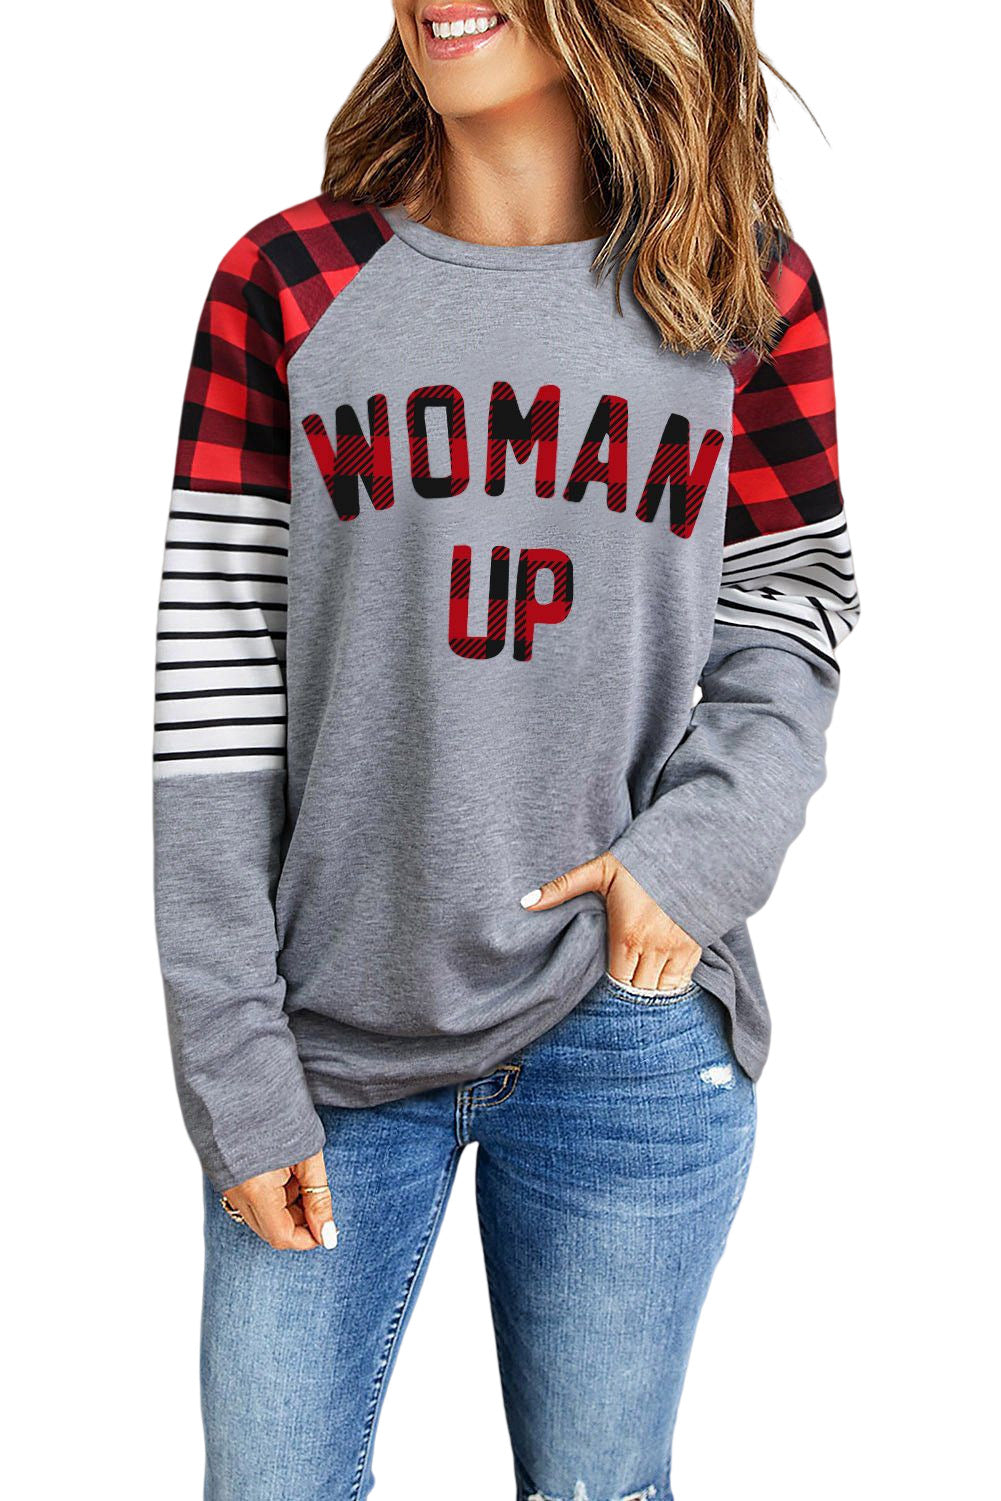 WOMAN UP Plaid Striped Raglan Sleeve Top - Kawaii Stop - Kawaii Shop